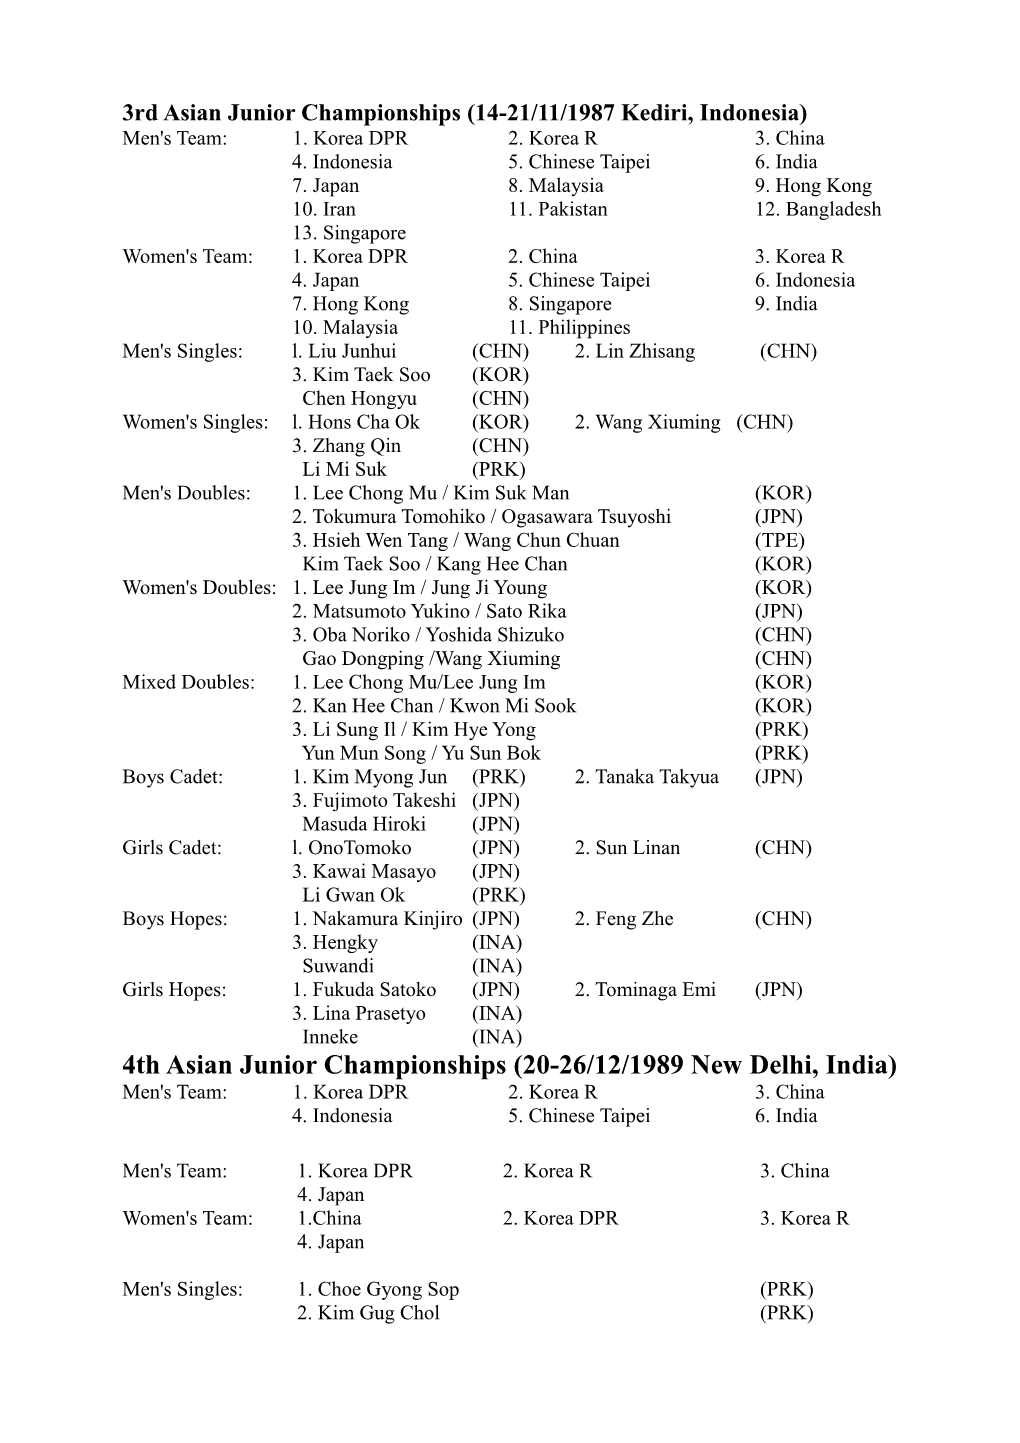 Asian Junior Championships Results 1983-2010